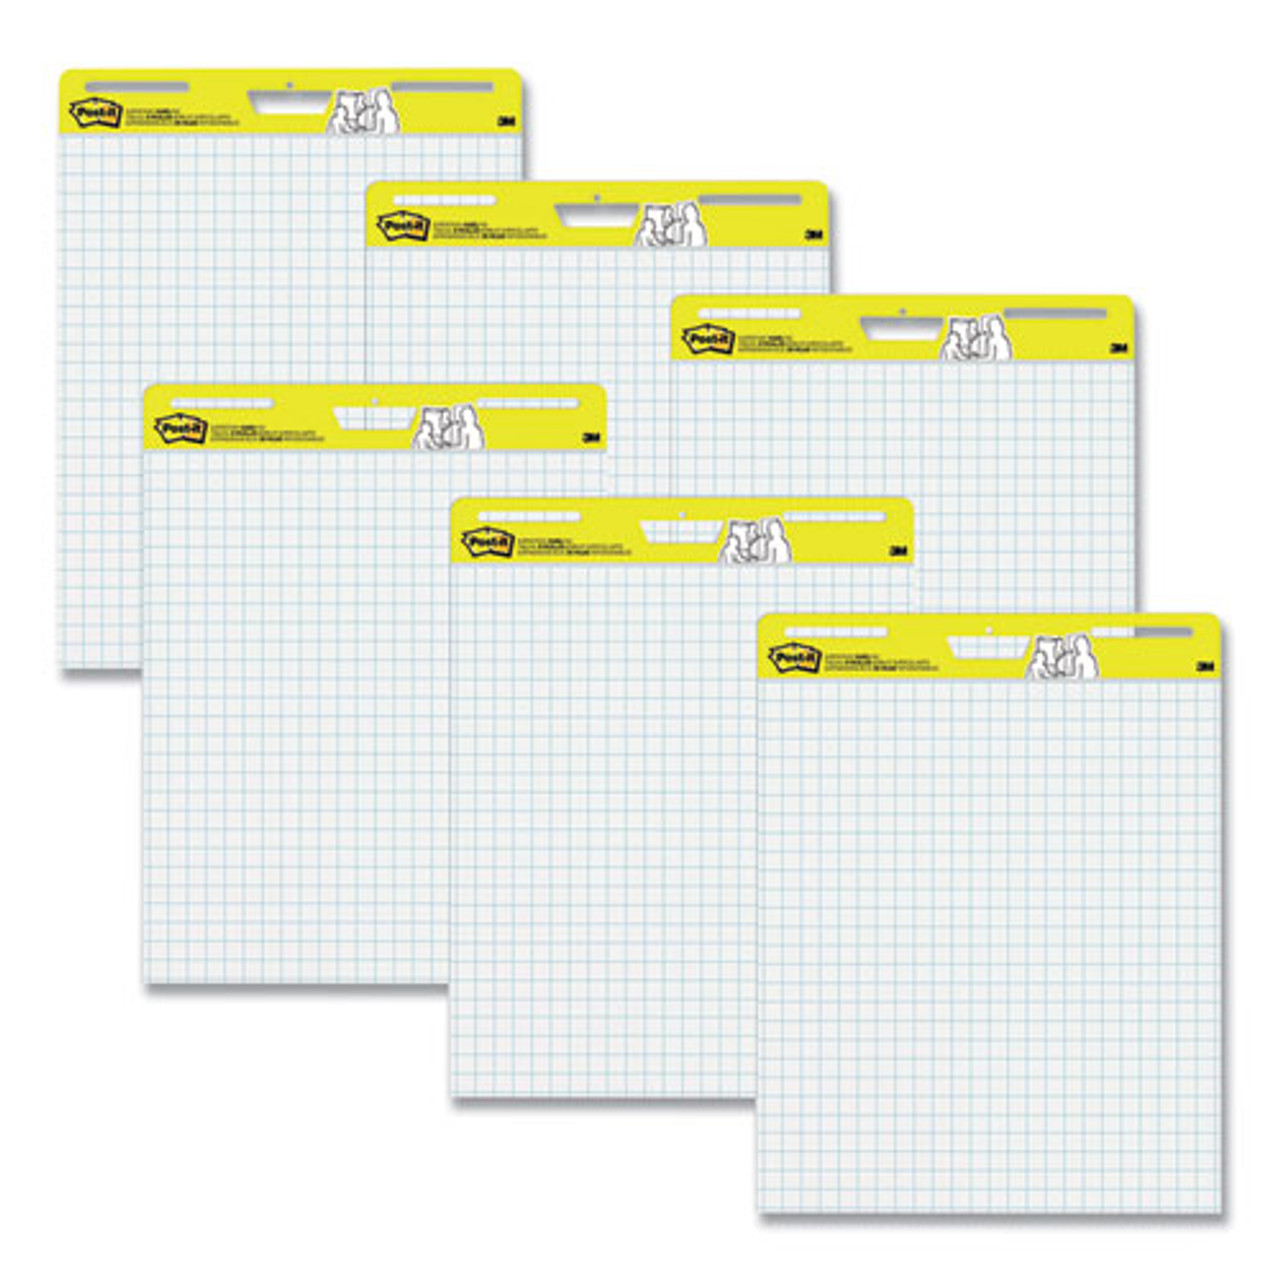 Post-it Self-Stick Easel Pads, 25 x 30, Yellow, 30 Sheets, 4/Carton